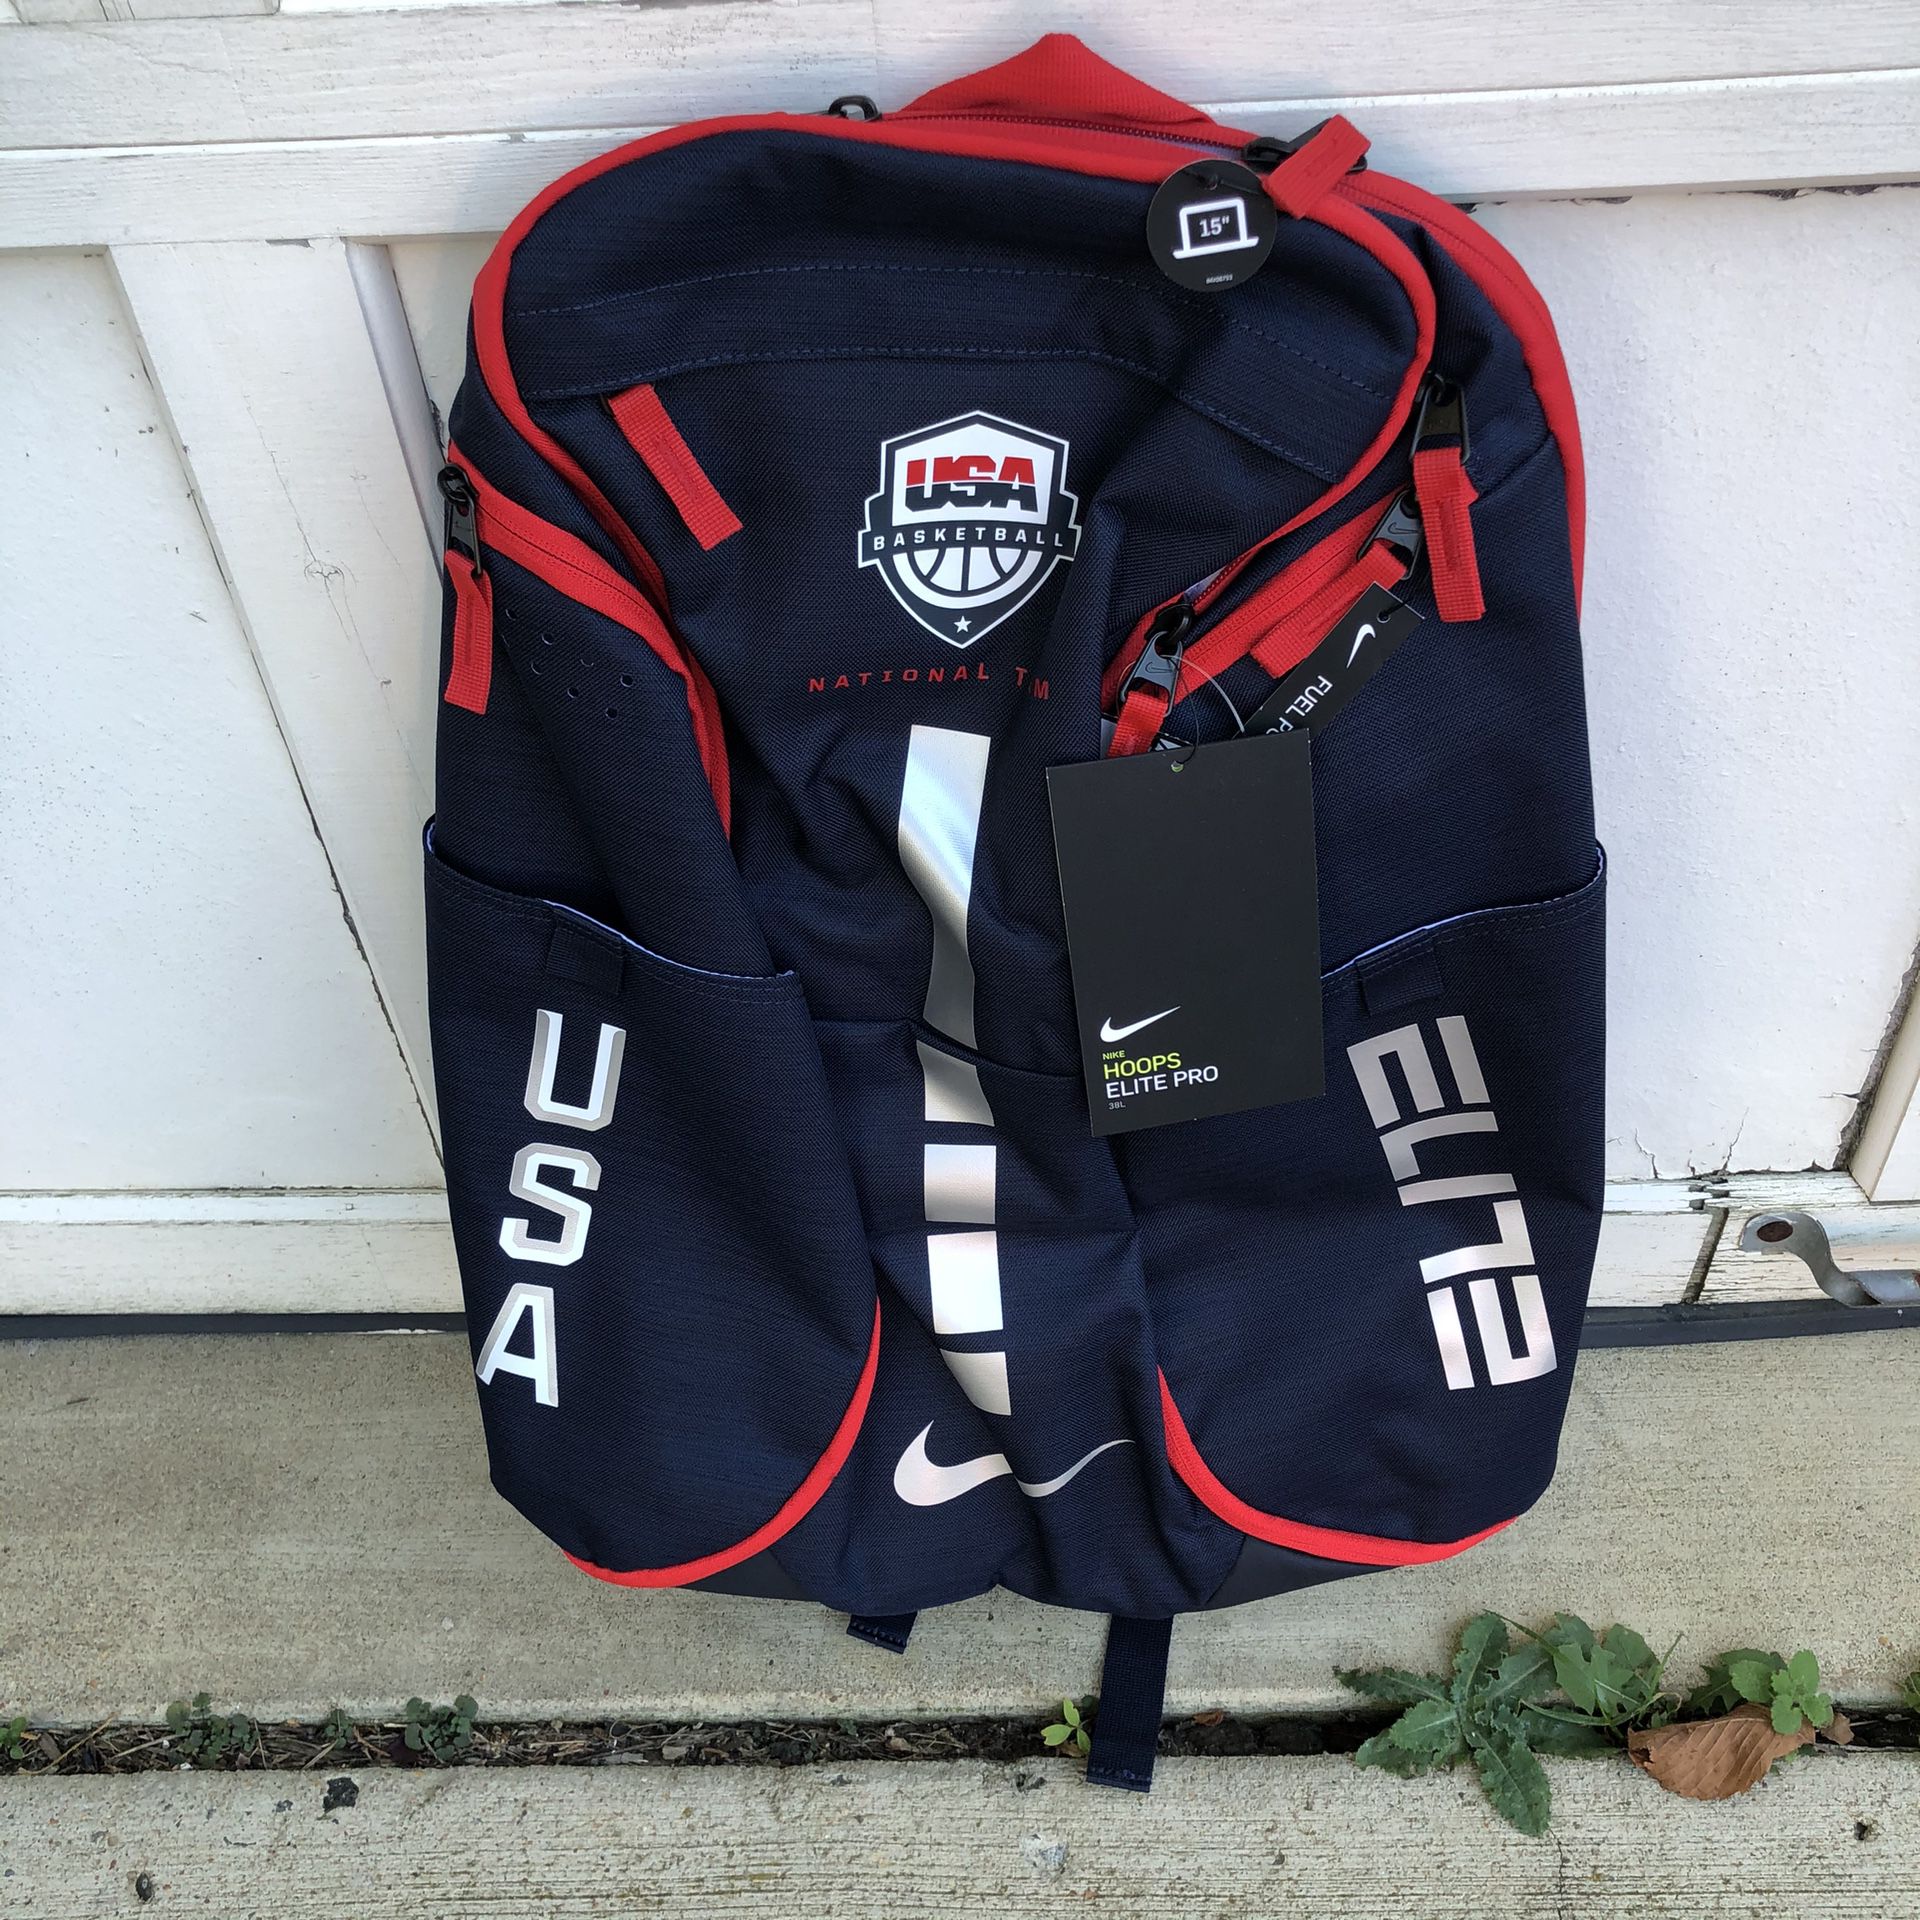 Nike Hoops ELITE Pro Backpack Team USA Olympic Worlds National CK1198-451